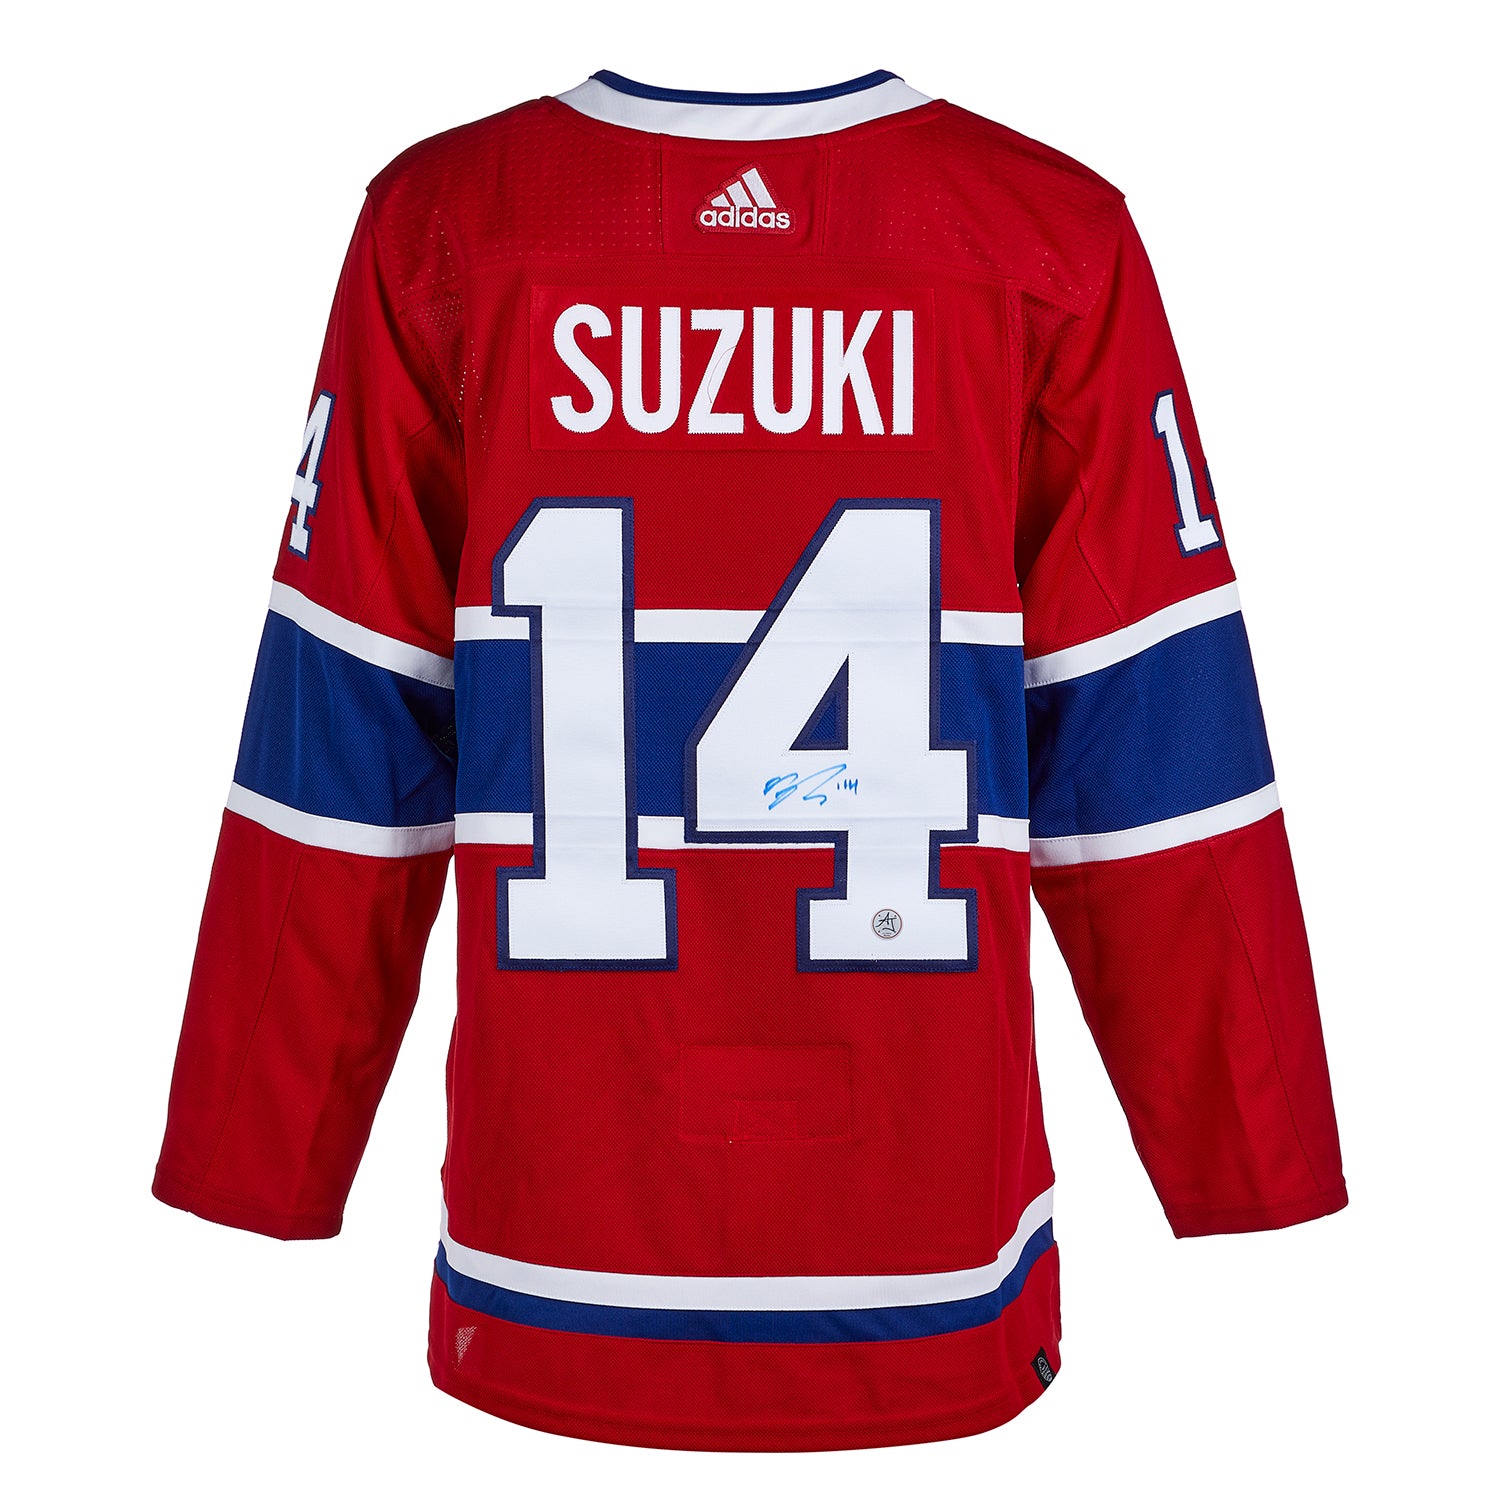 Nick Suzuki Signed Canadiens Jersey (JSA)